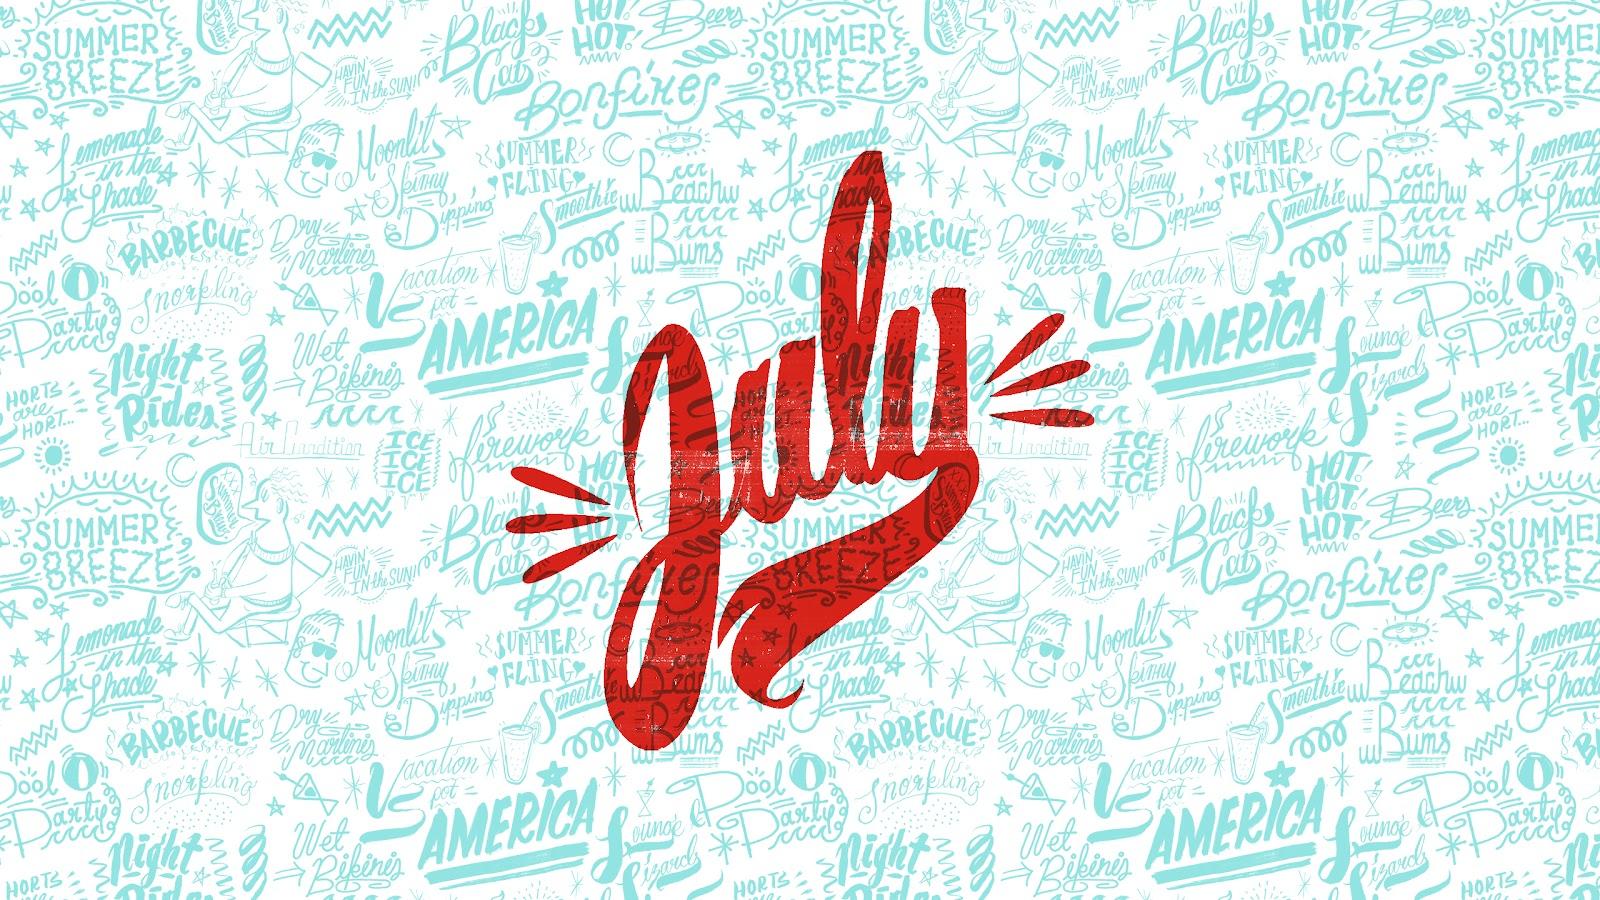 July Calendar Wallpaper  80 Best Styles For Your Desktop Or Phone  Background